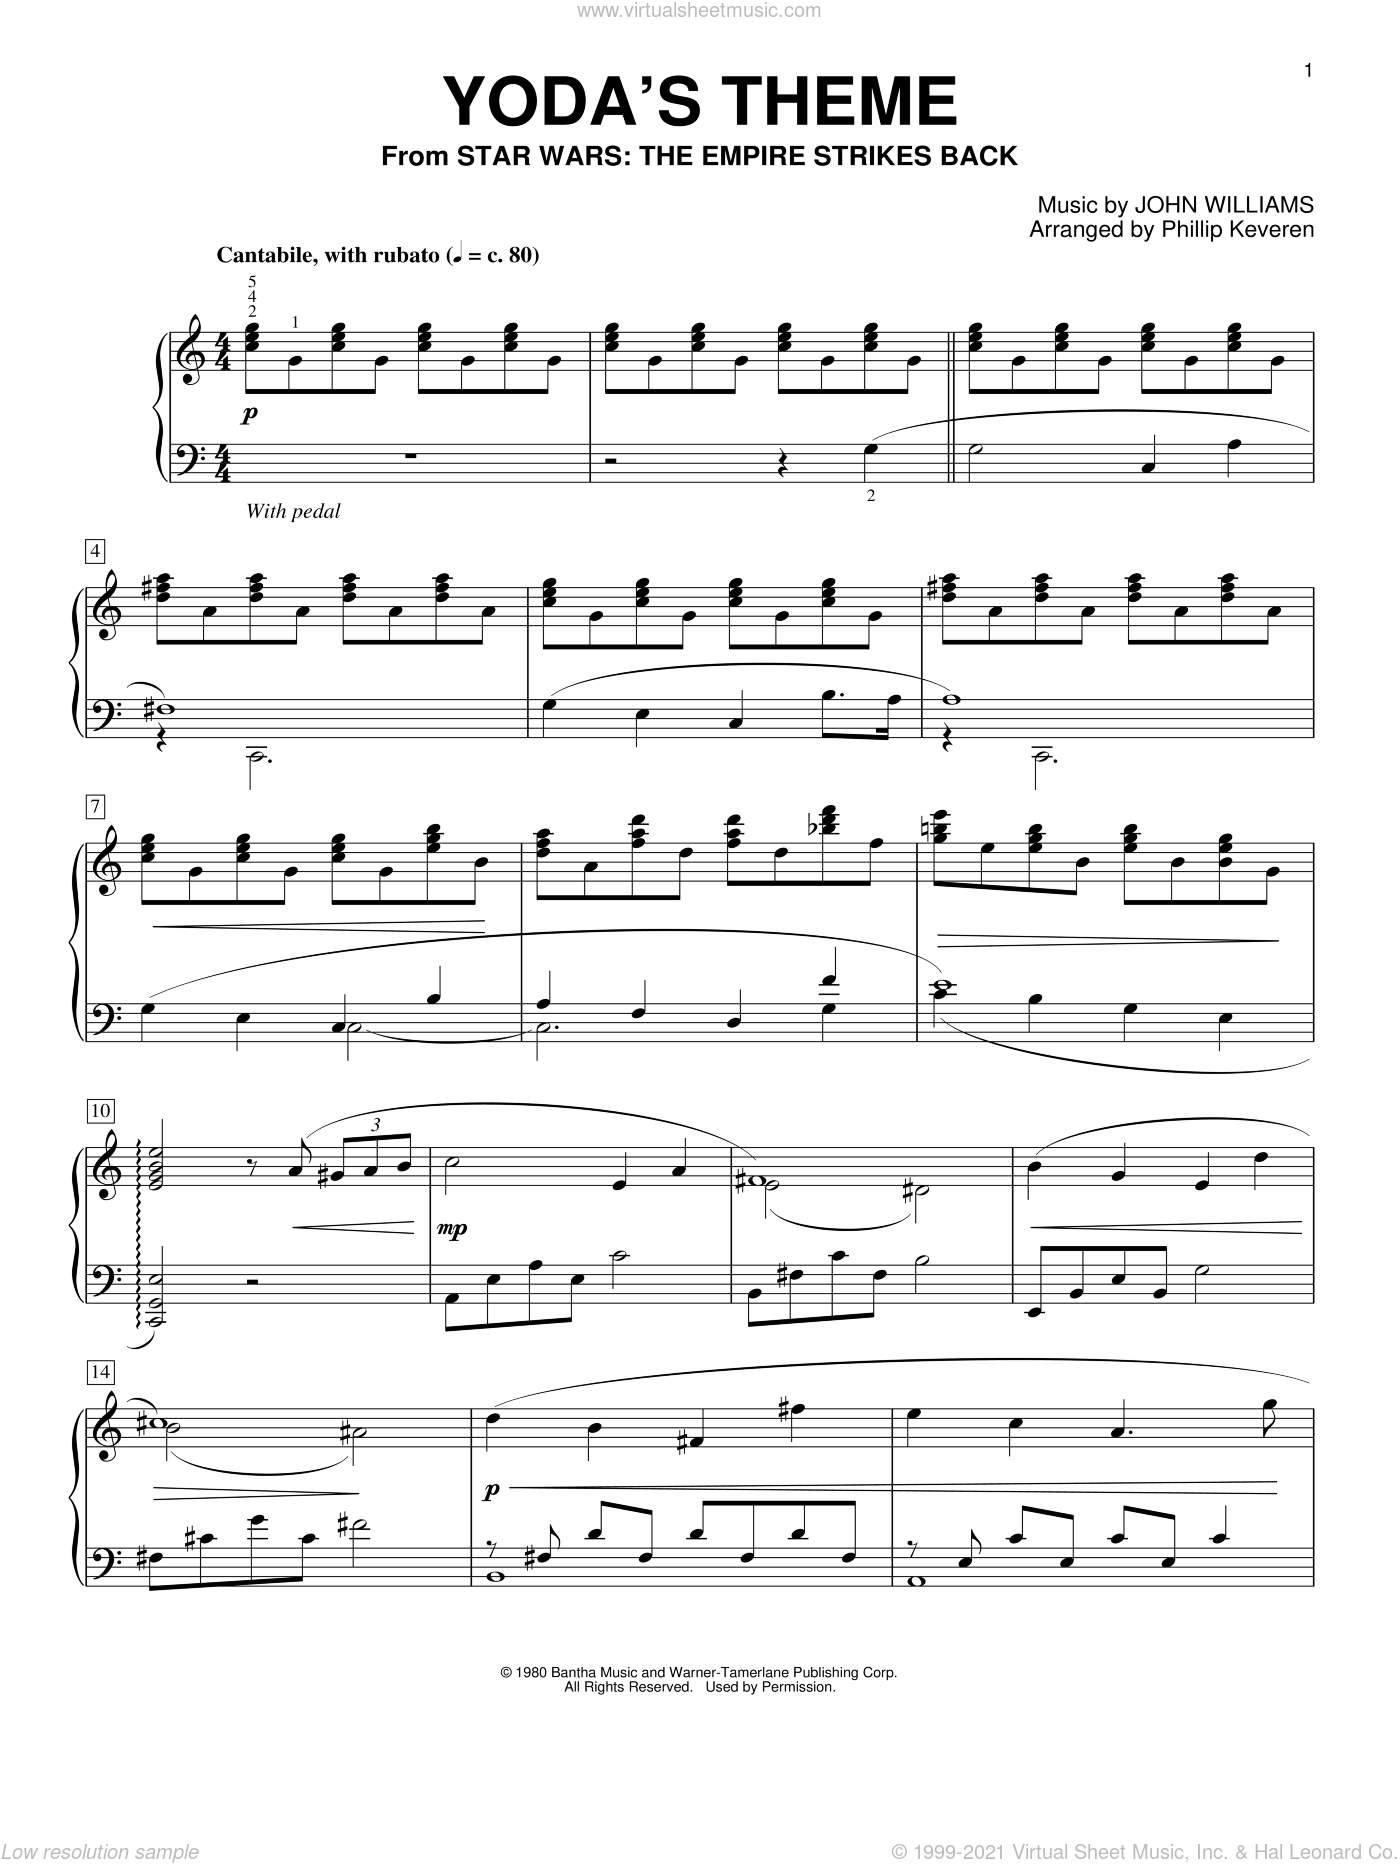 Digital sheet music for piano, (intermediate). 